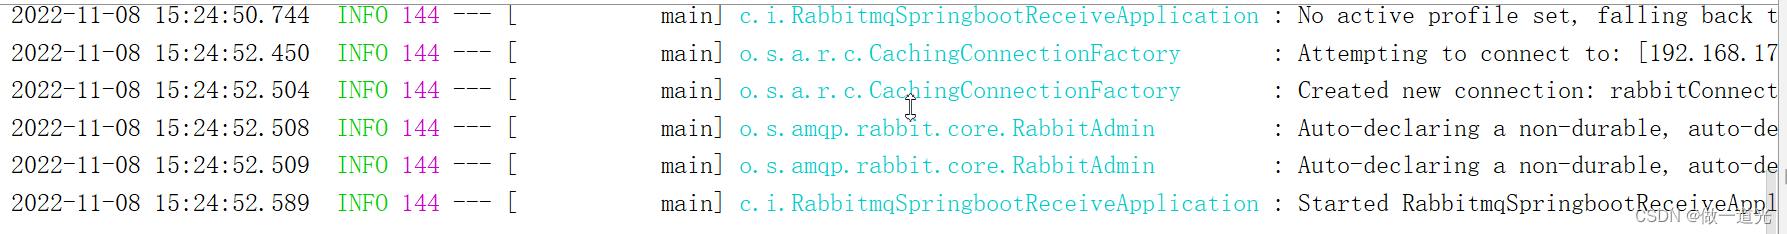 rabbitmq docker，springboot集成rabbitmq:fanout、topic